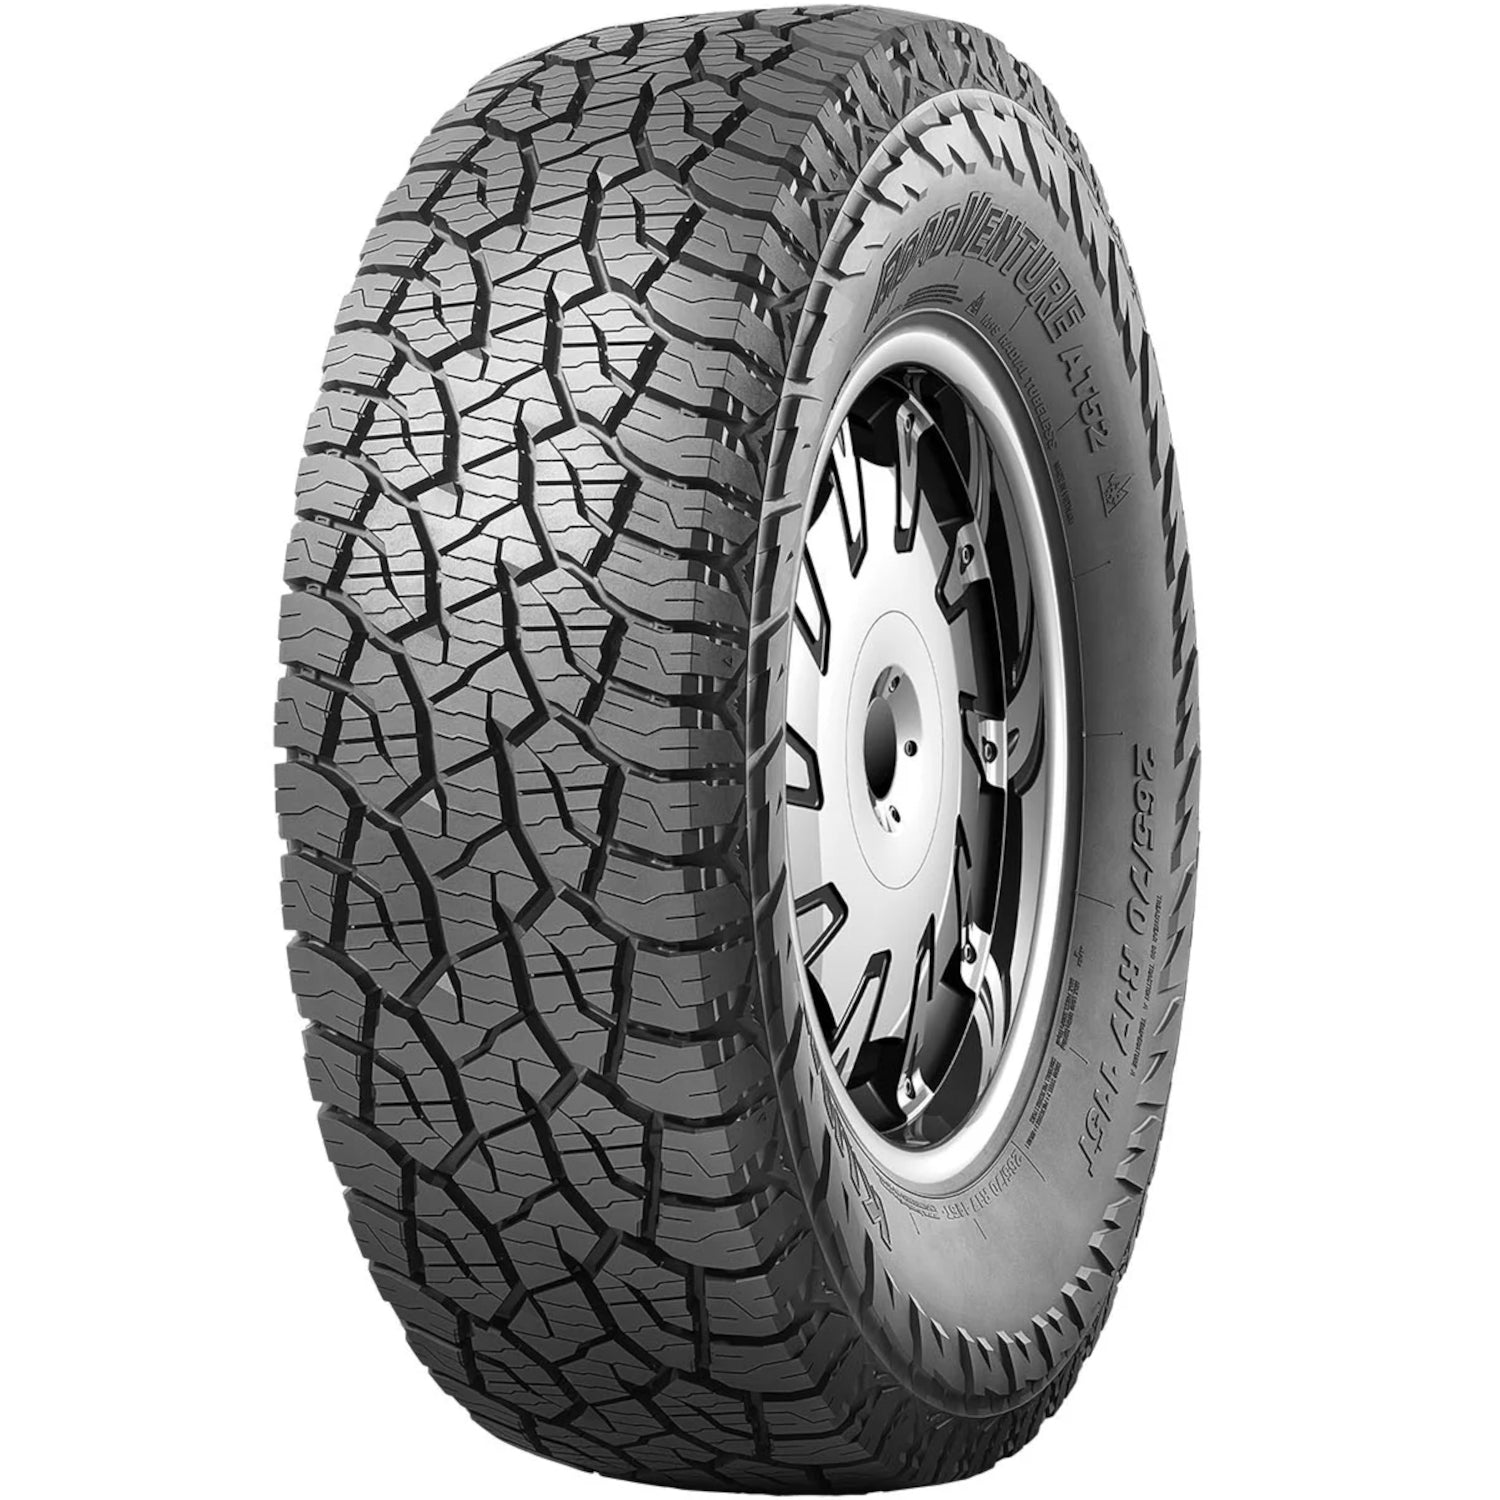 KUMHO ROAD VENTURE AT52 LT285/65R18 (32.6X11.2R 18) Tires